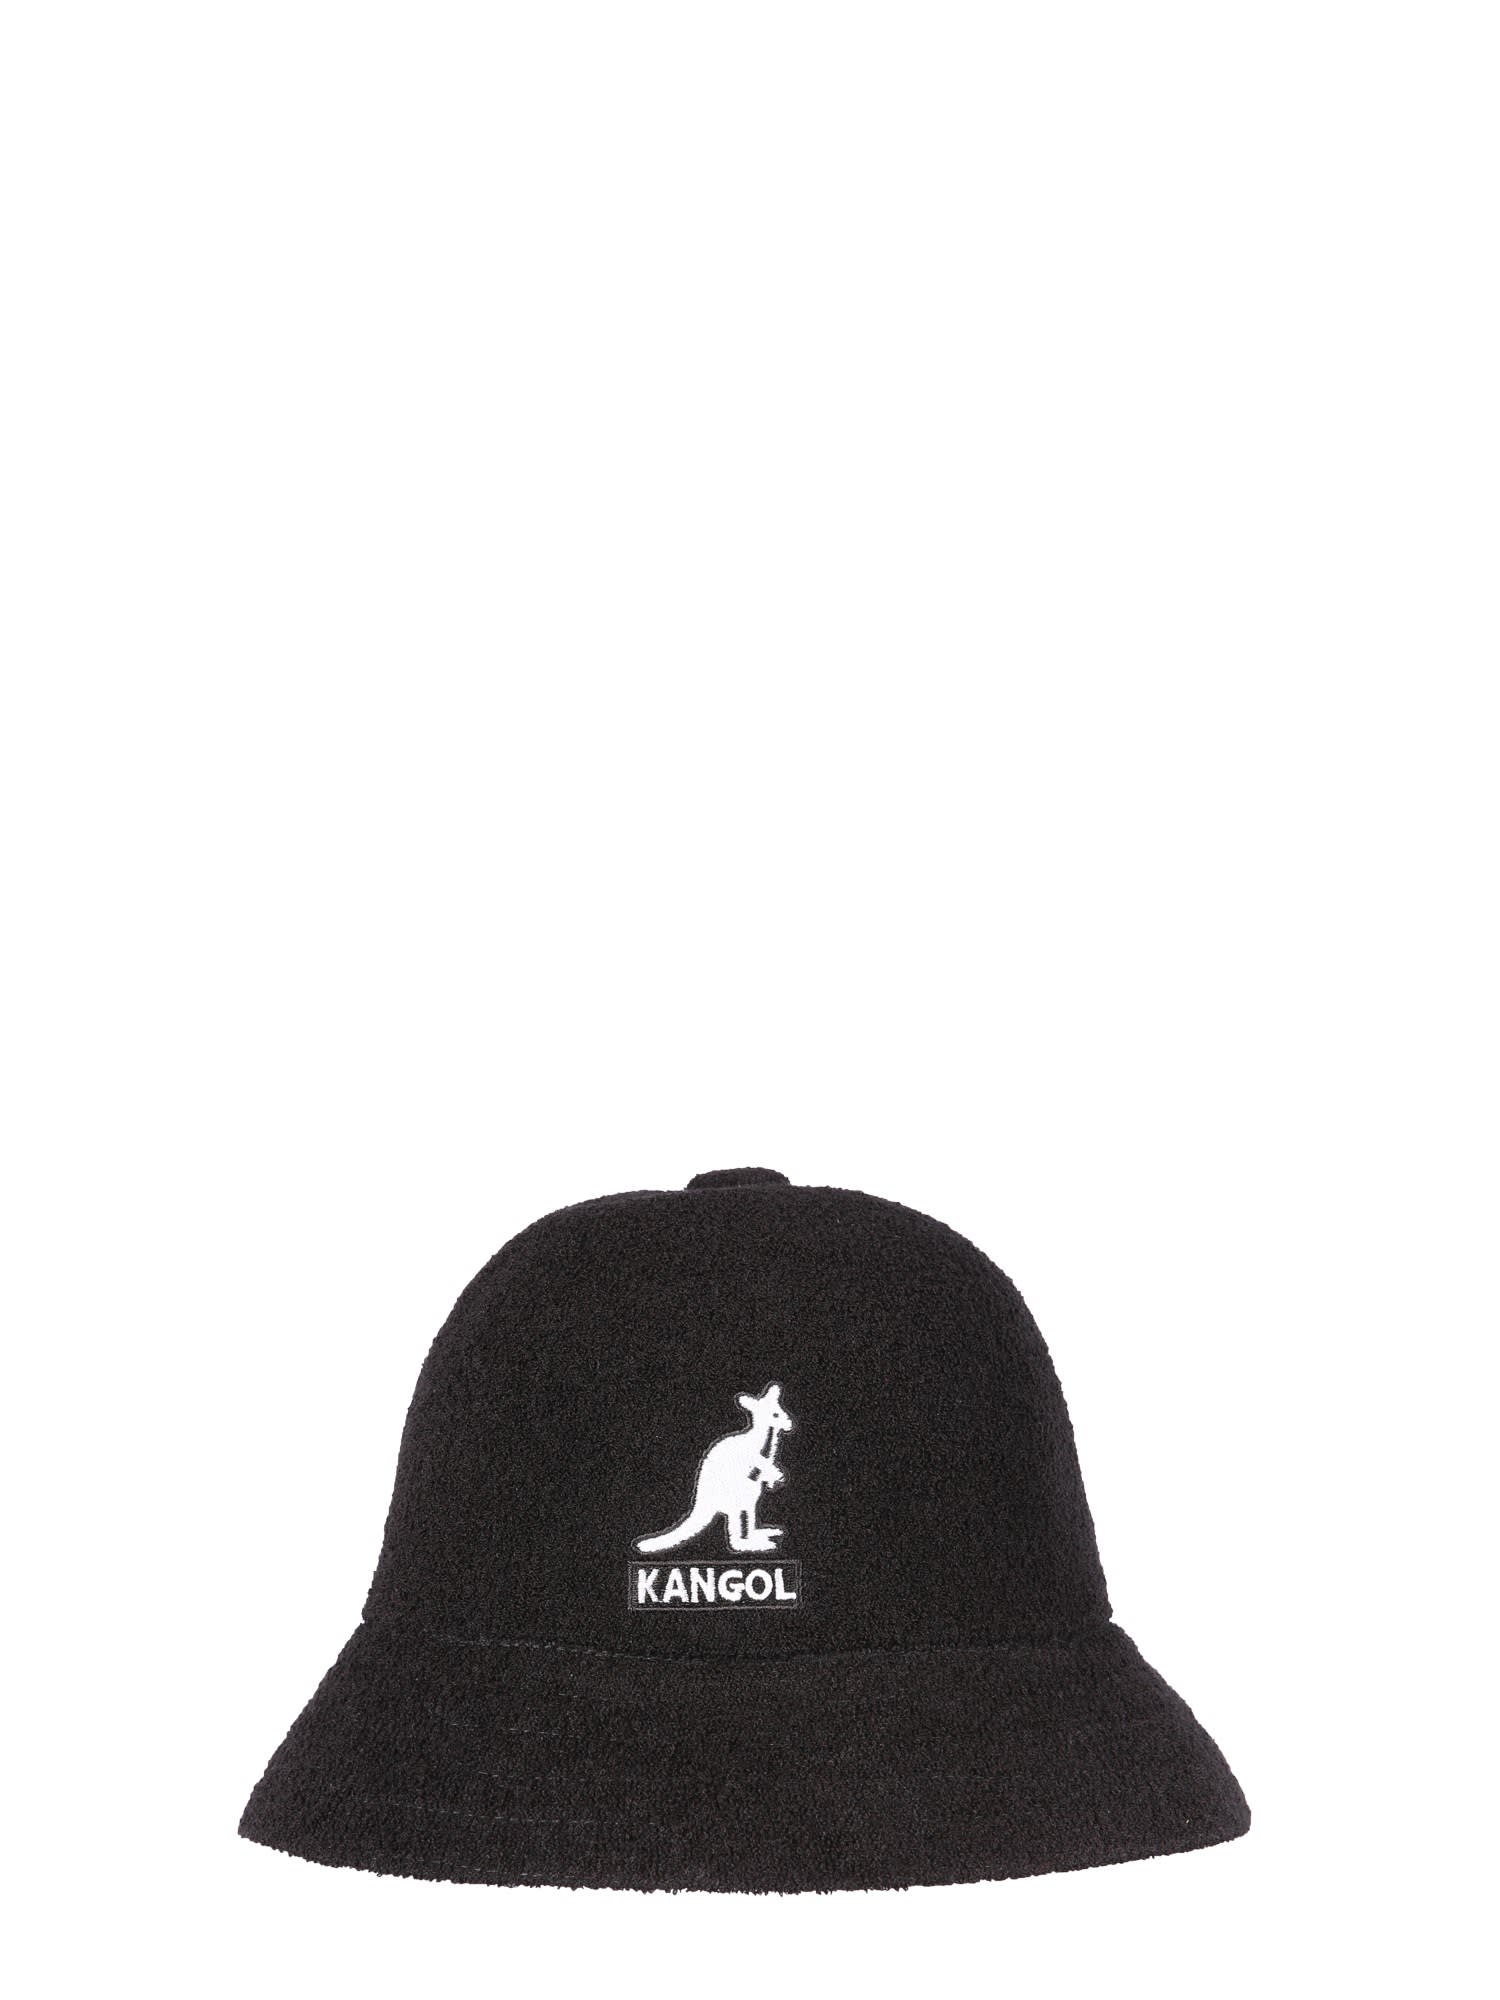 Kangol Casual Hat With Big Logo